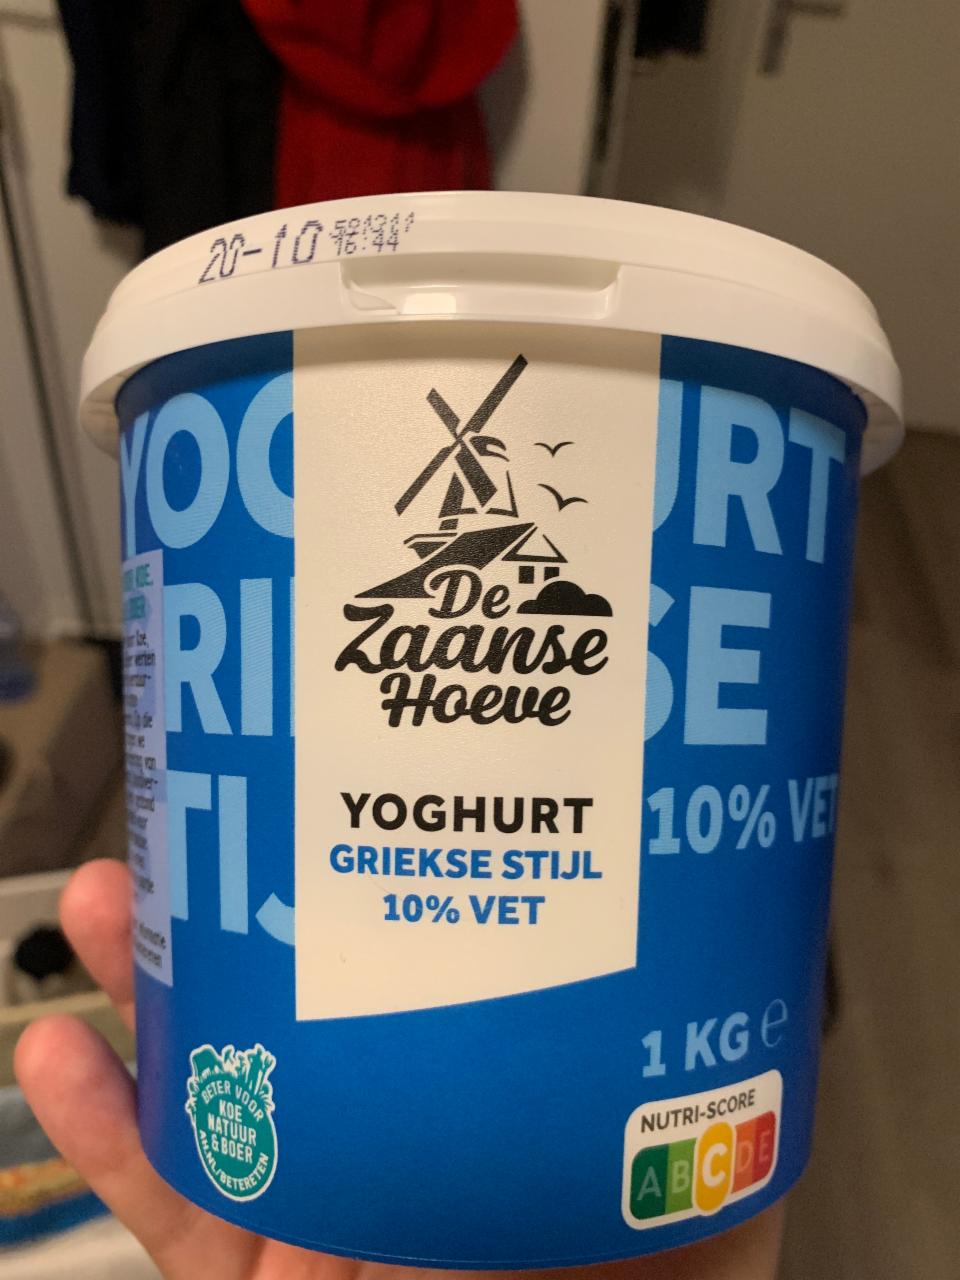 Fotografie - Yoghurt Griekse stijl 10% vet De Zaanse Hoeve